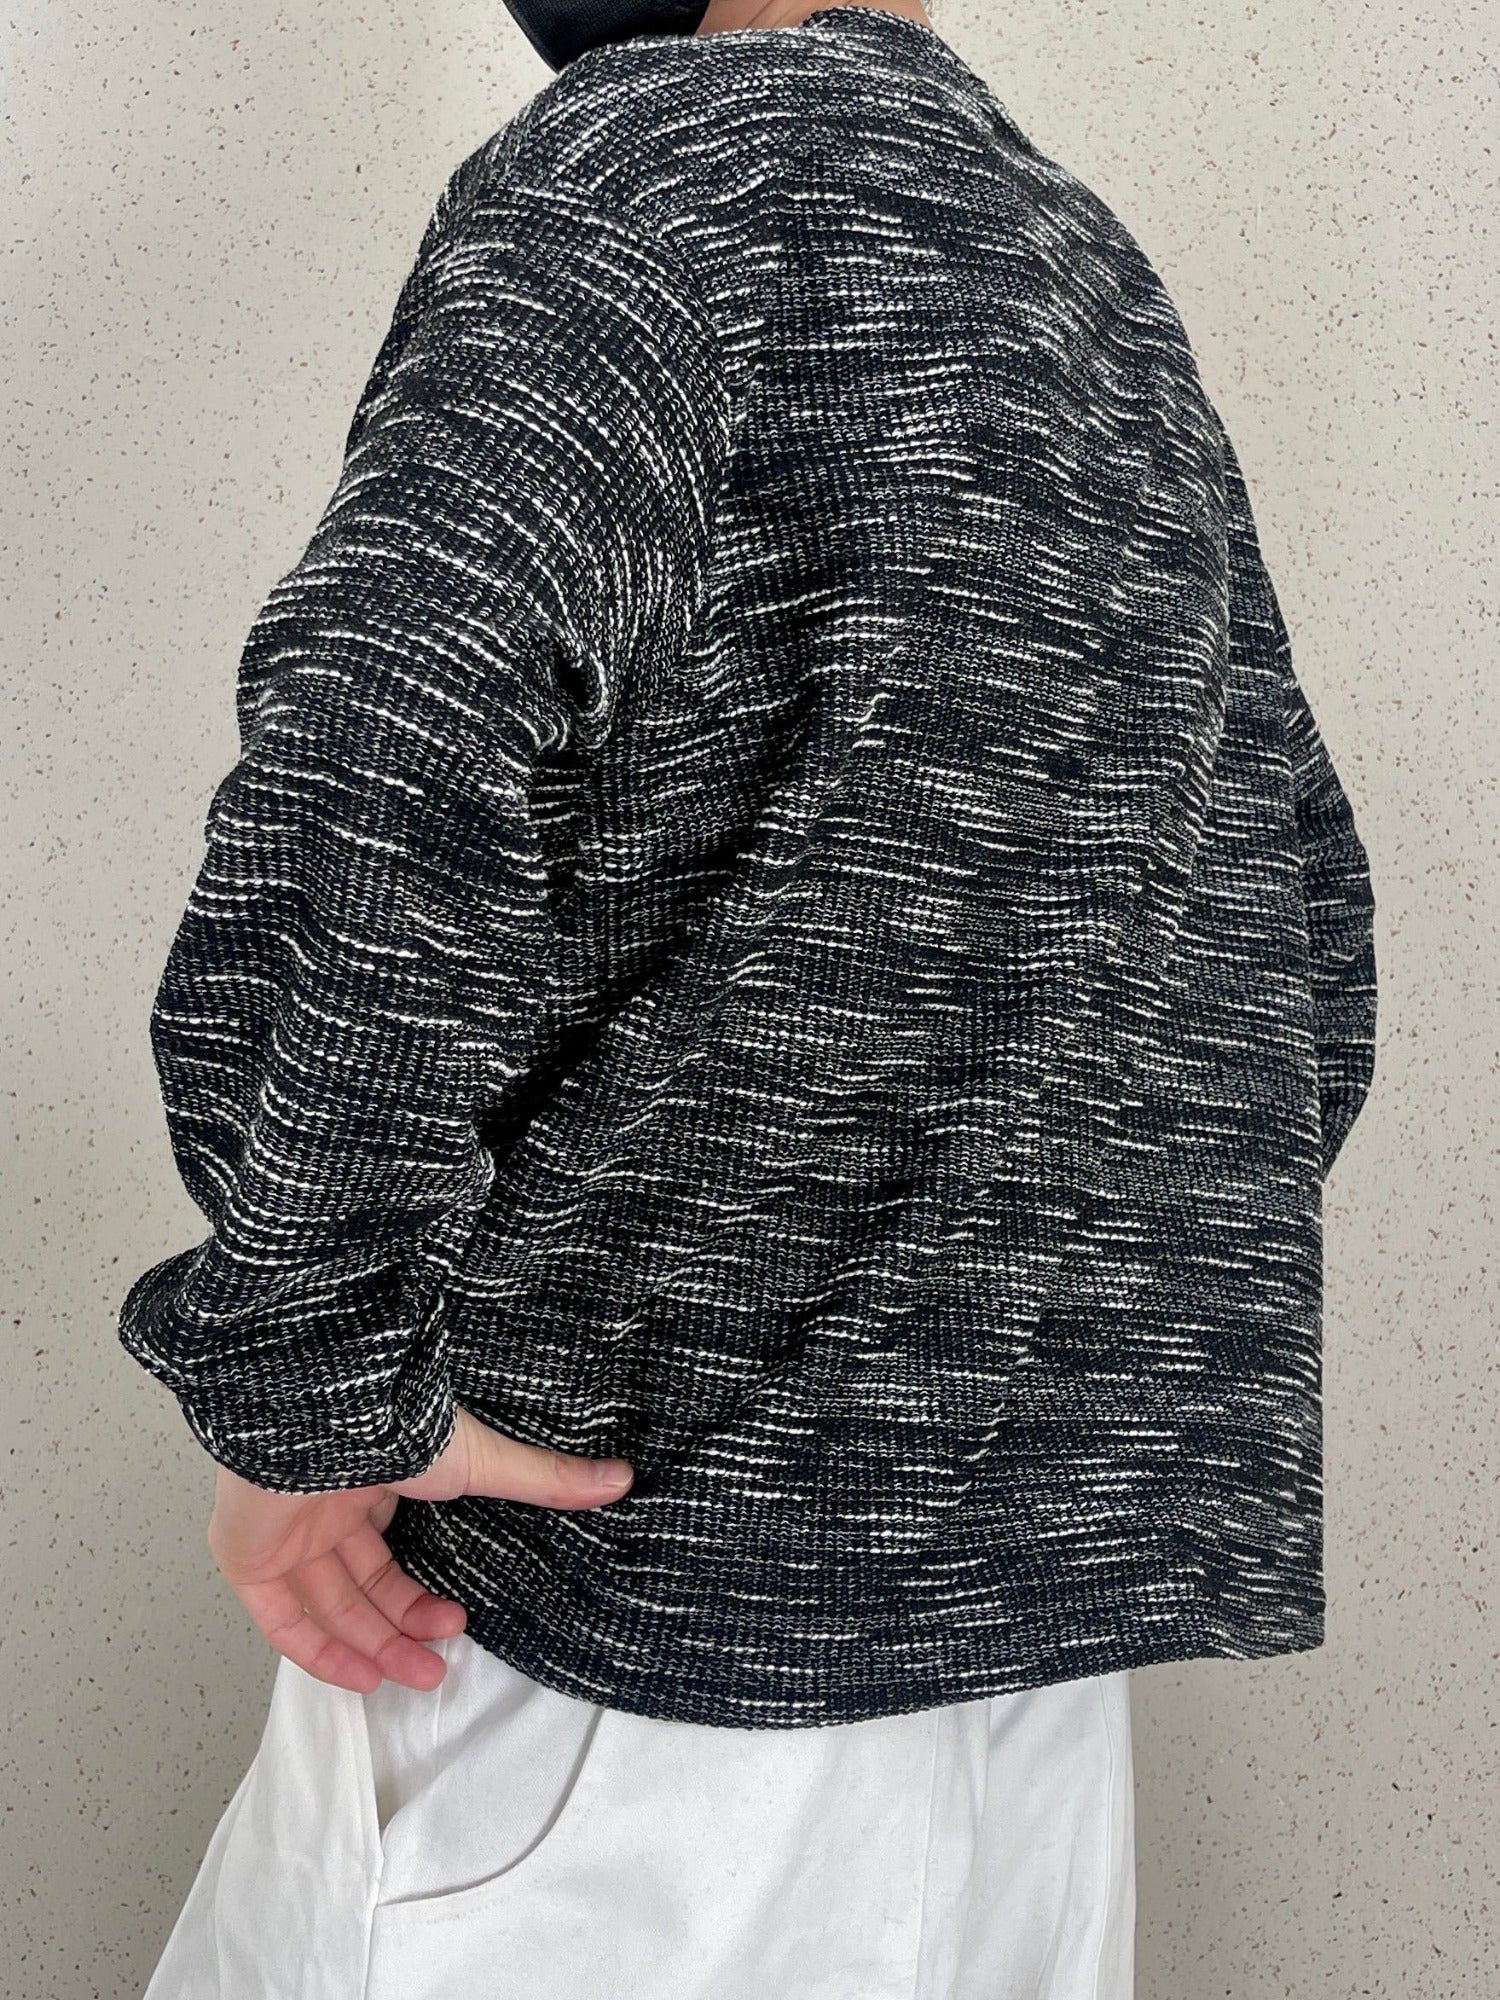 Rough Tweed Knit Black 트위드 오버핏 긴팔티 루즈핏 남자 봄 니트 블랙